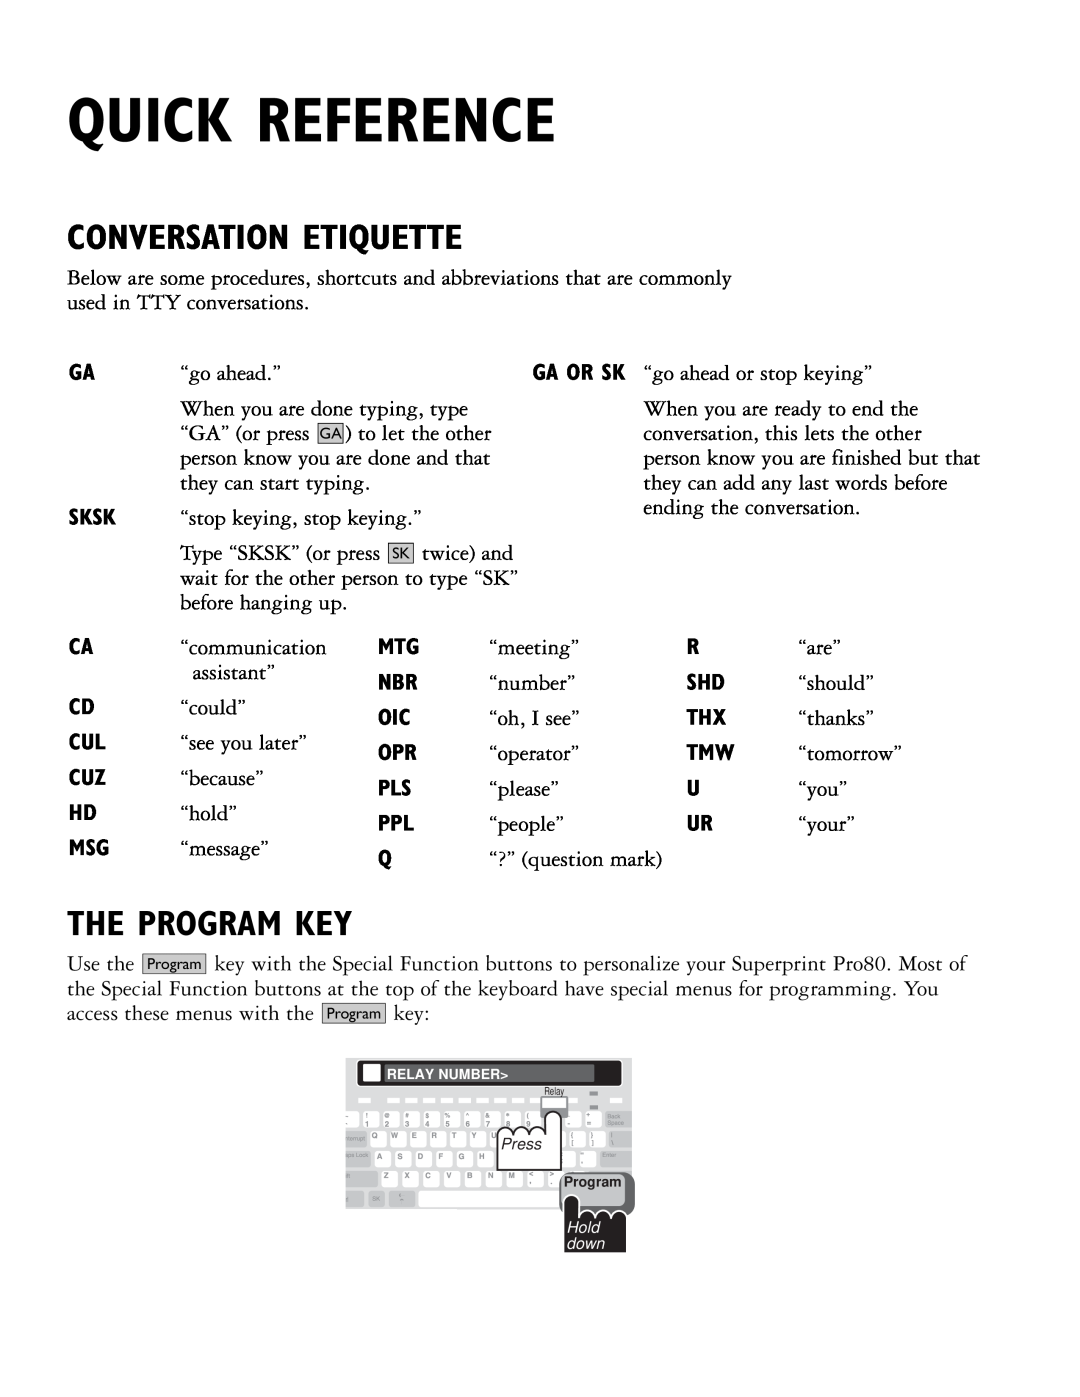 Ultratec PRO80TM manual Quick Reference, The Program Key, Ga Or Sk, Conversation Etiquette, Sksk 